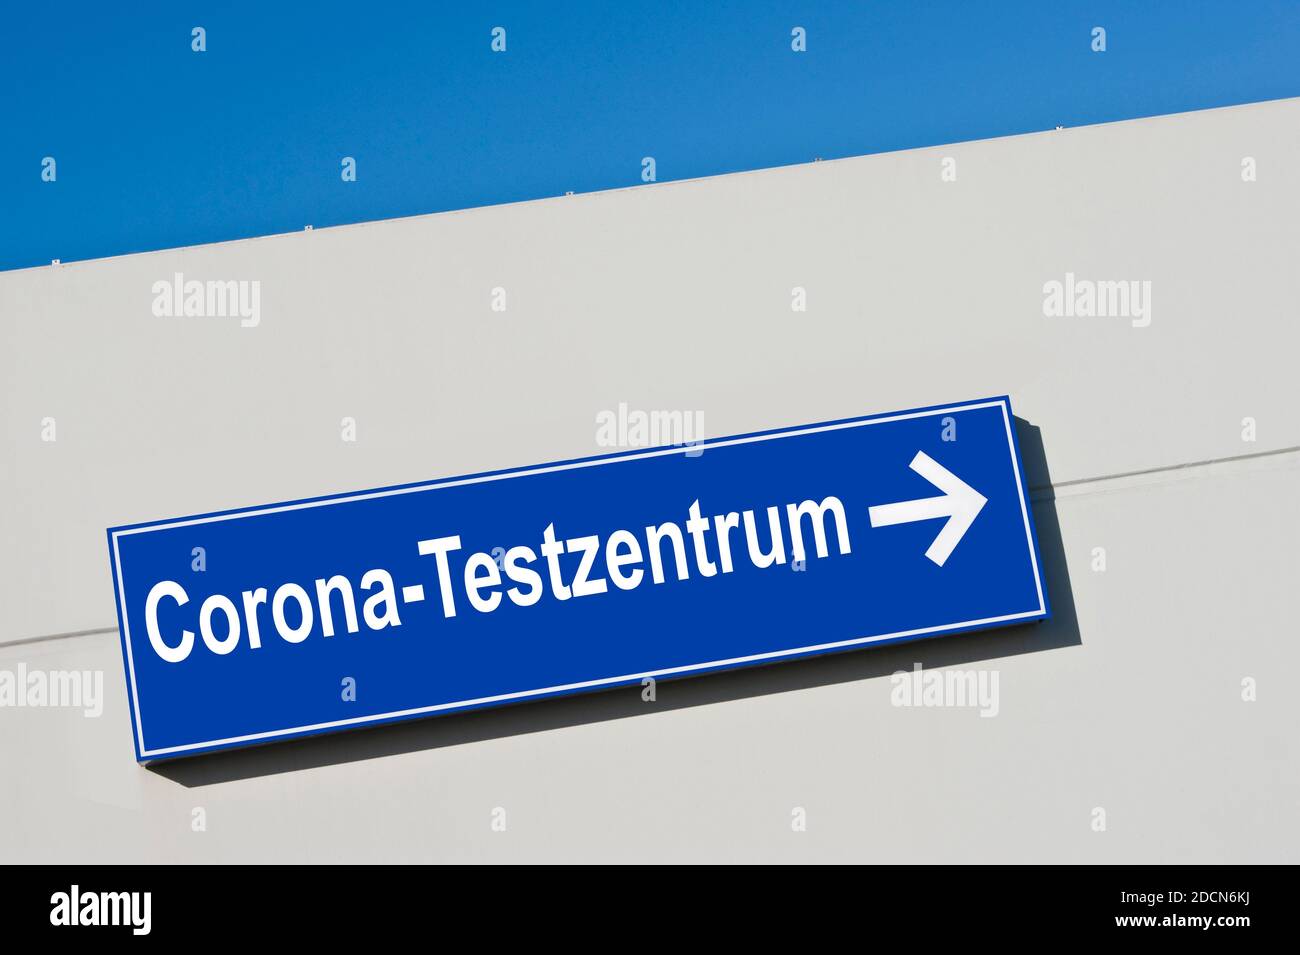 German Corona-Testzentrum against blue sign Stock Photo